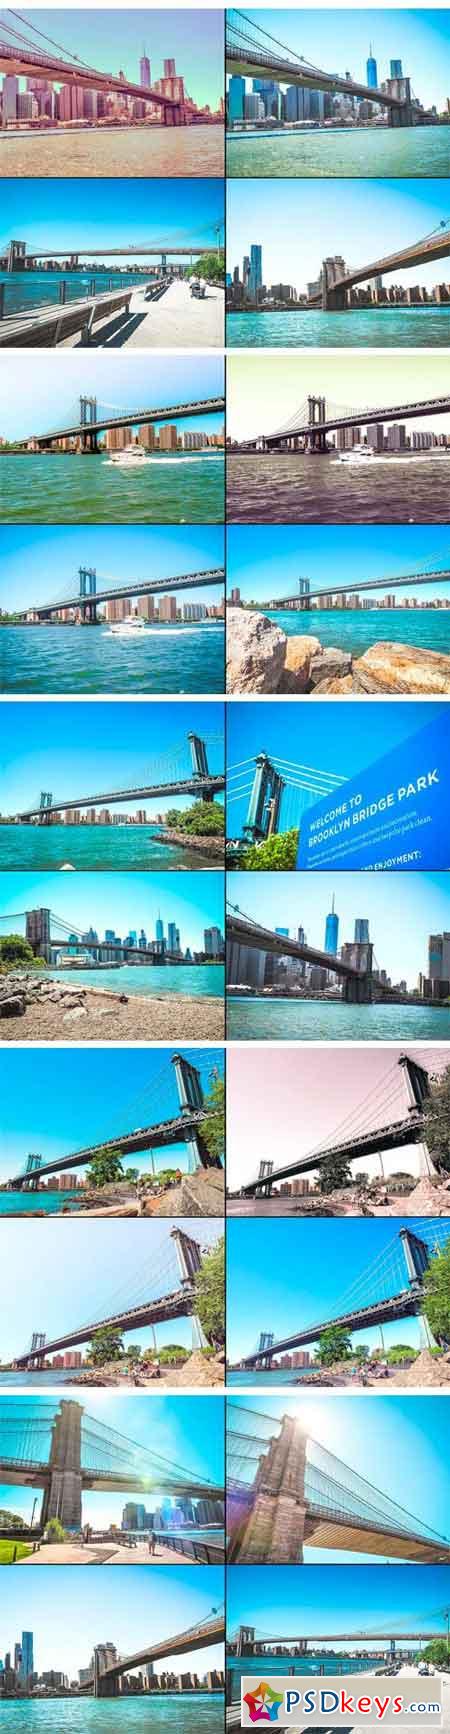 New York Bridges 25 Pics 1299197